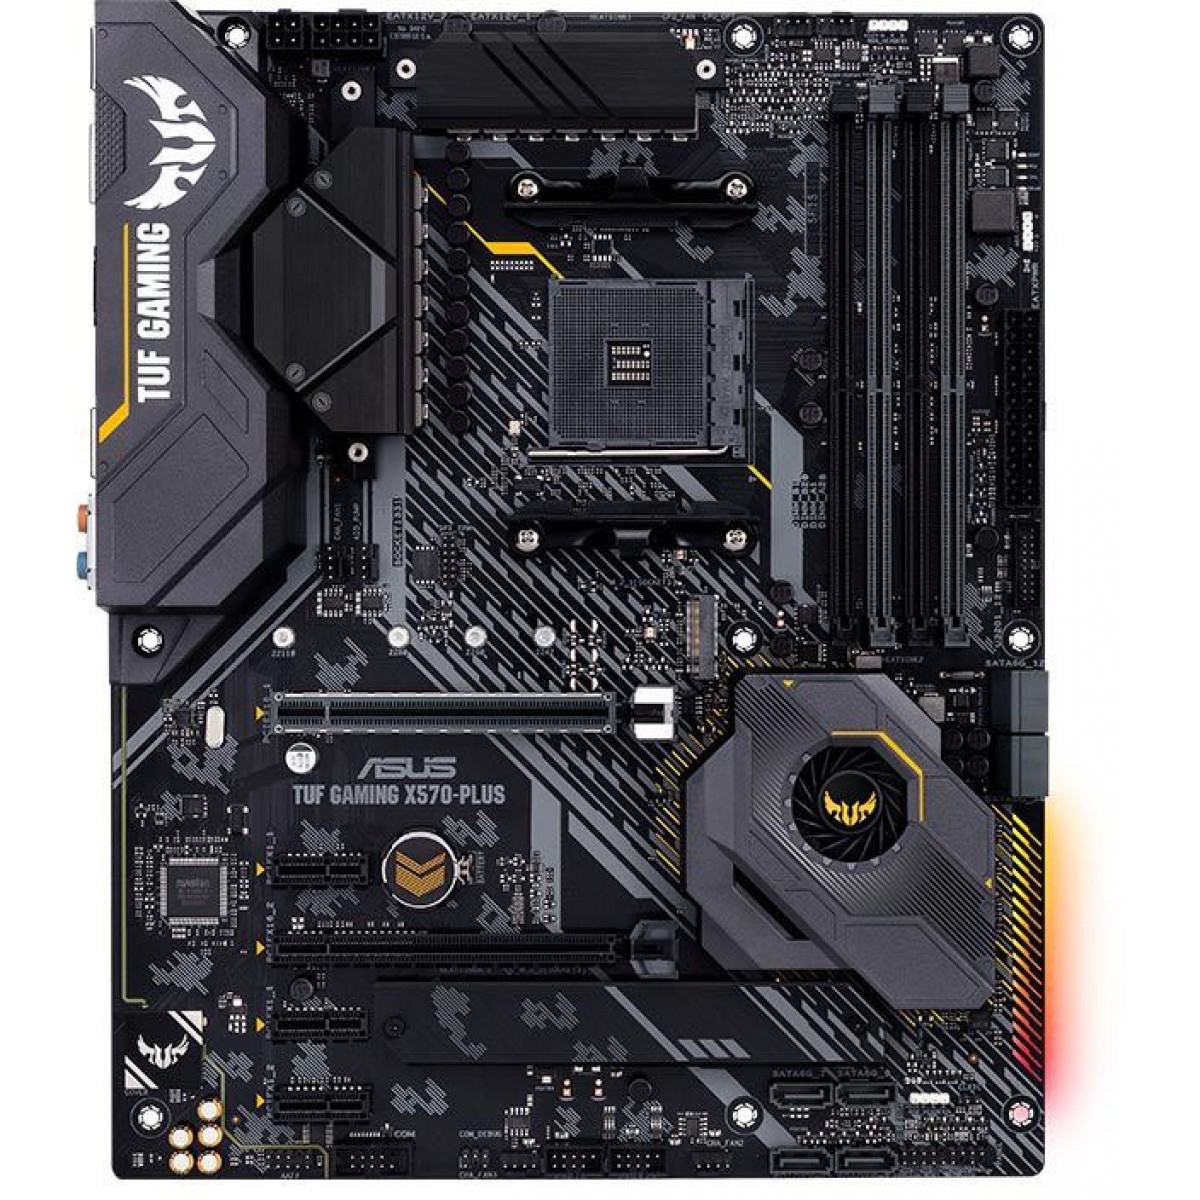  Kit Upgrade, ASUS TUF Gaming X570-Plus + AMD Ryzen 7 5700G + Memória DDR4, 16GB 3000MHz